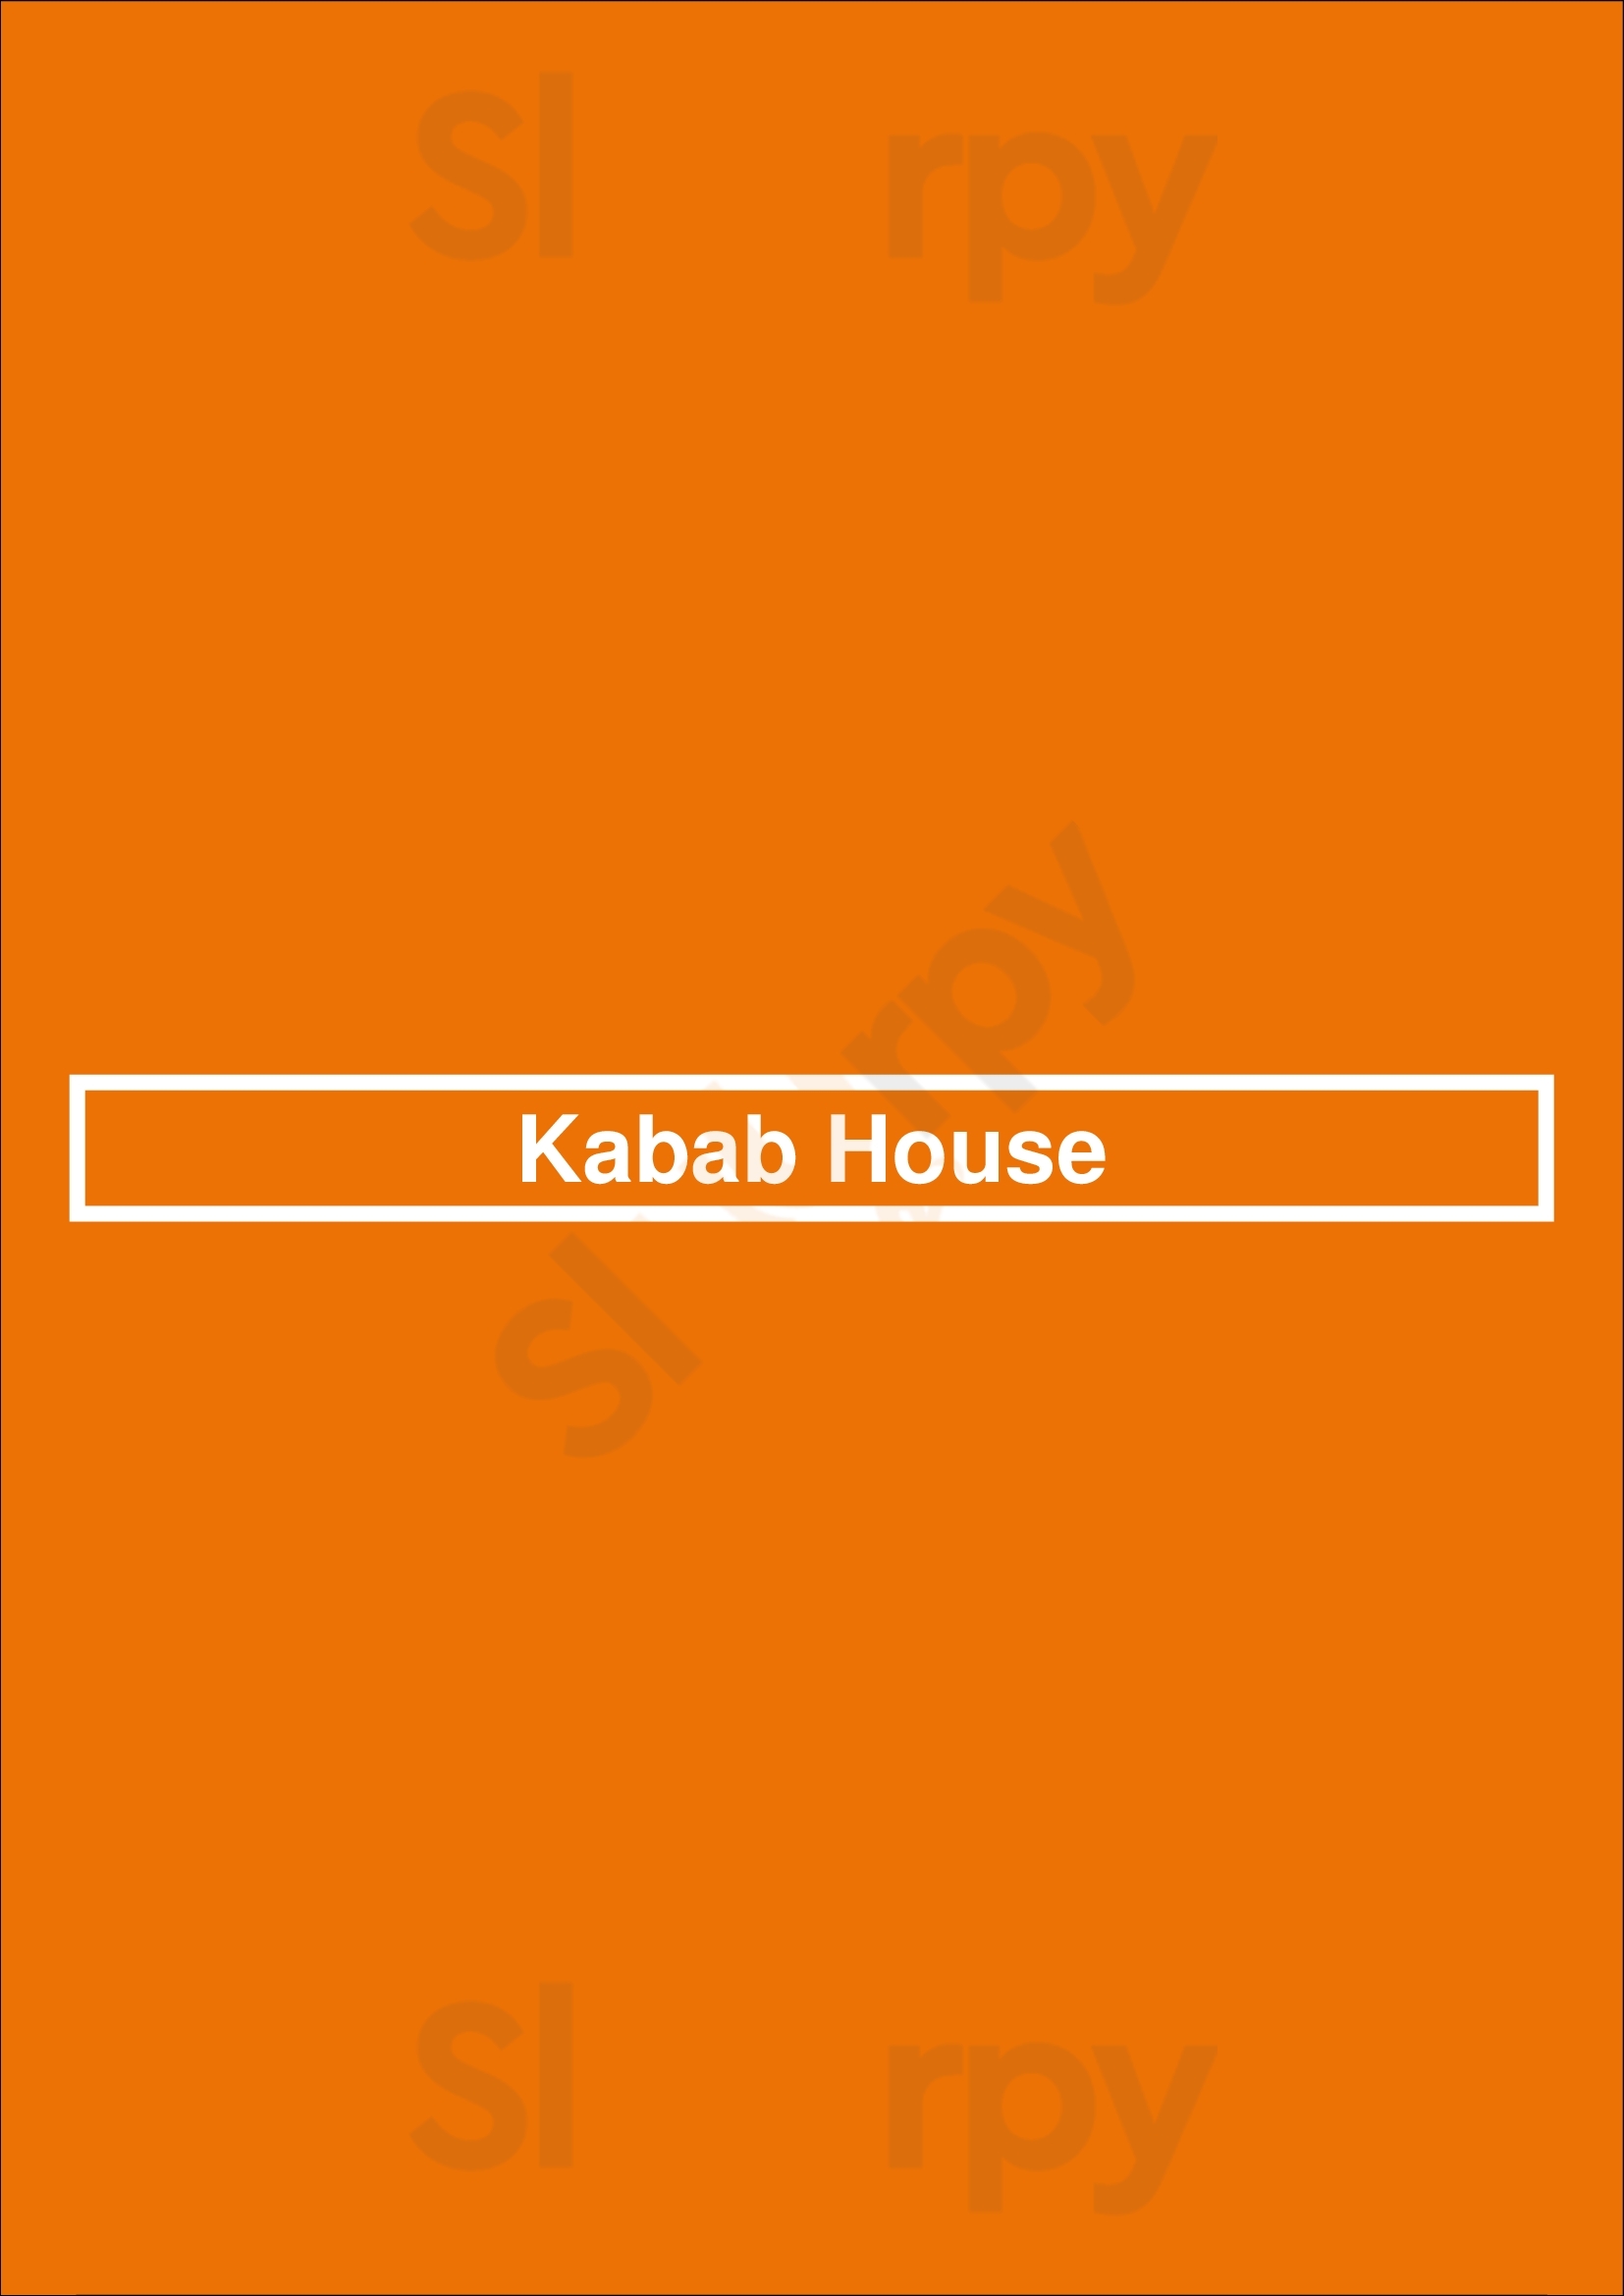 Kabab House Gainesville Menu - 1